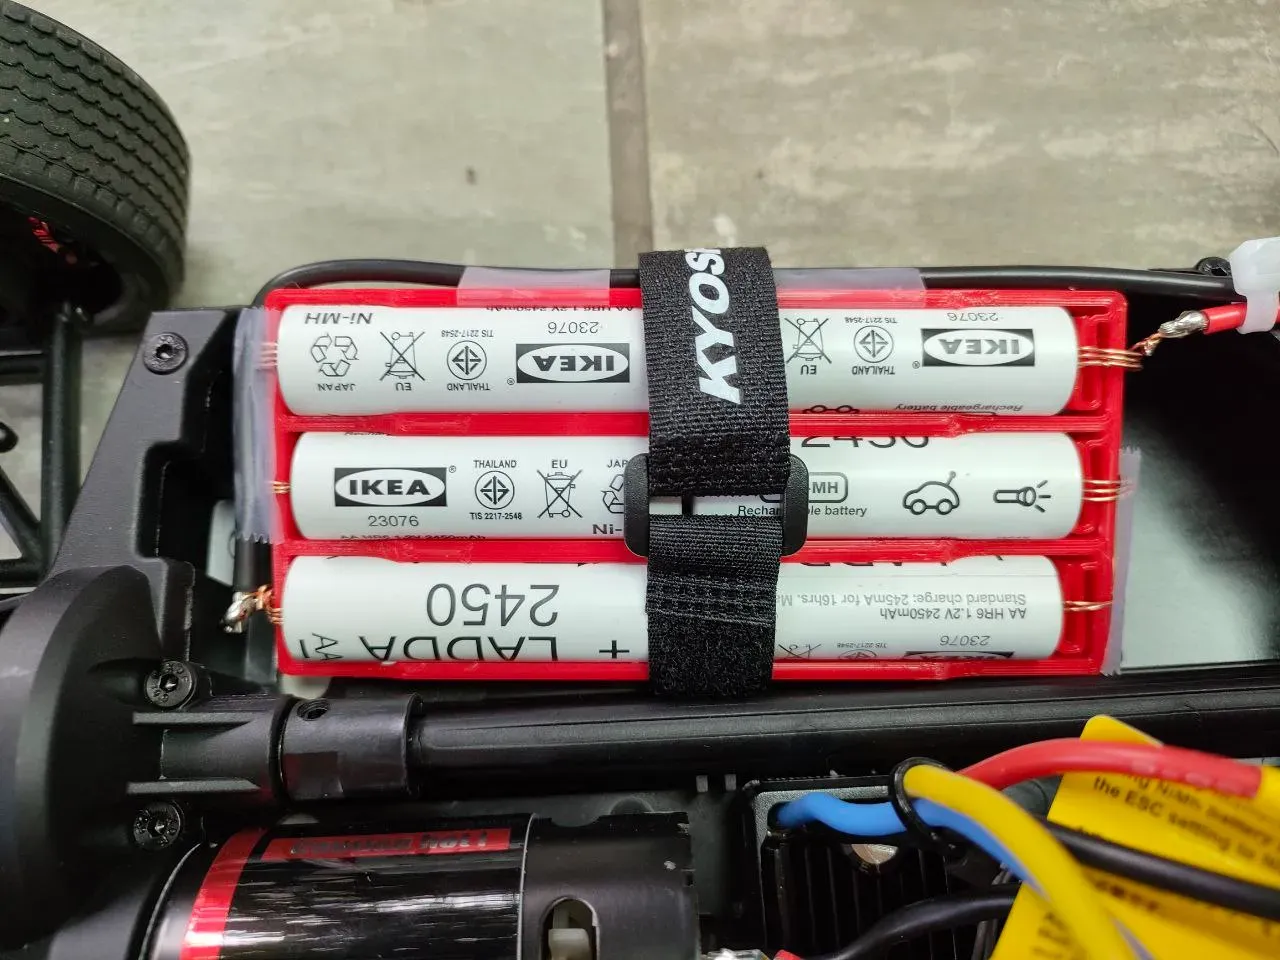 AA Battery Holder NiMH 7.2V for RC Car by MustardBun